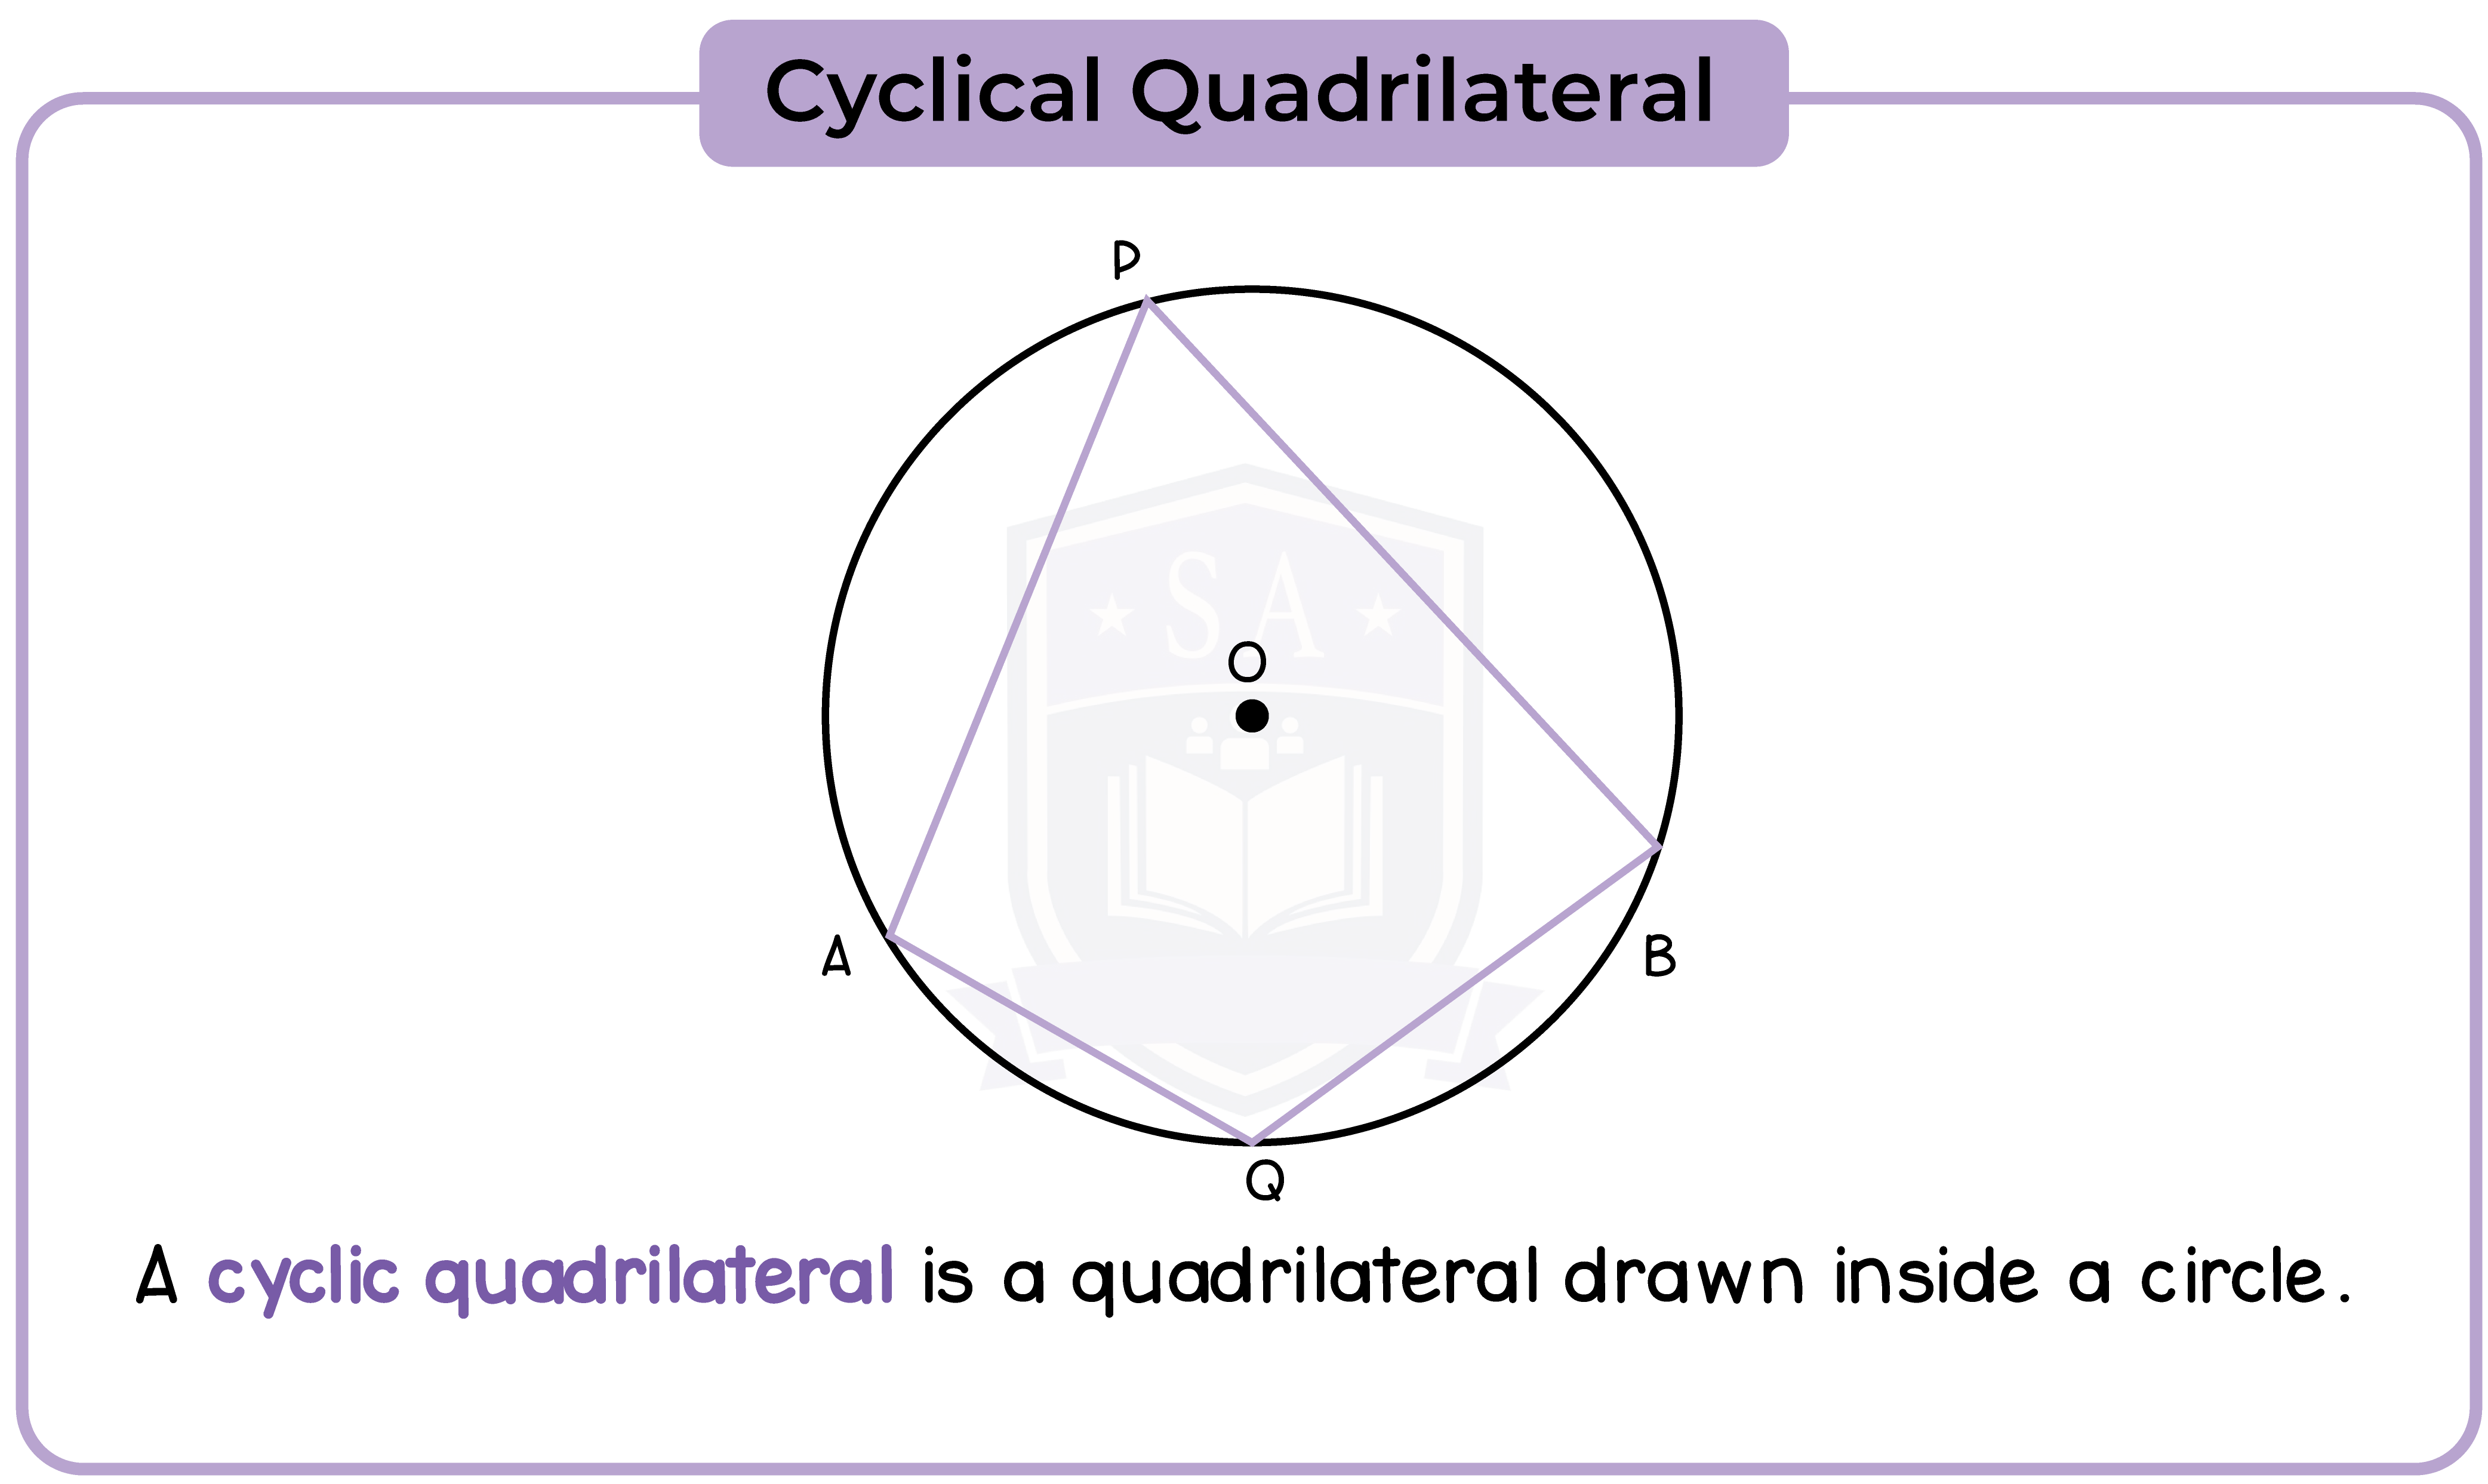 edexcel_igcse_mathematics a_topic 30_circle properties_009_Cyclical Quadrilateral